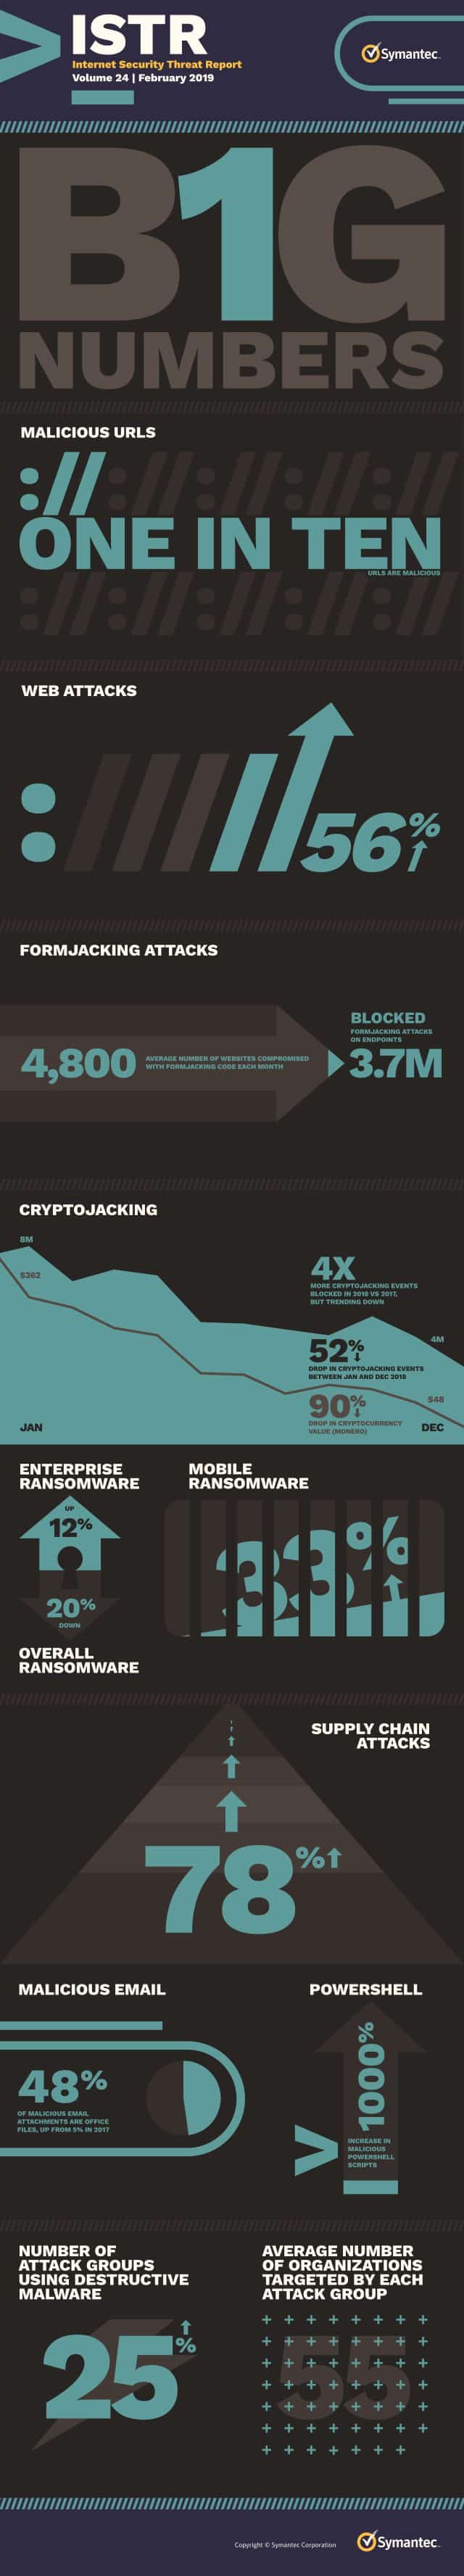 Symantec security infographic